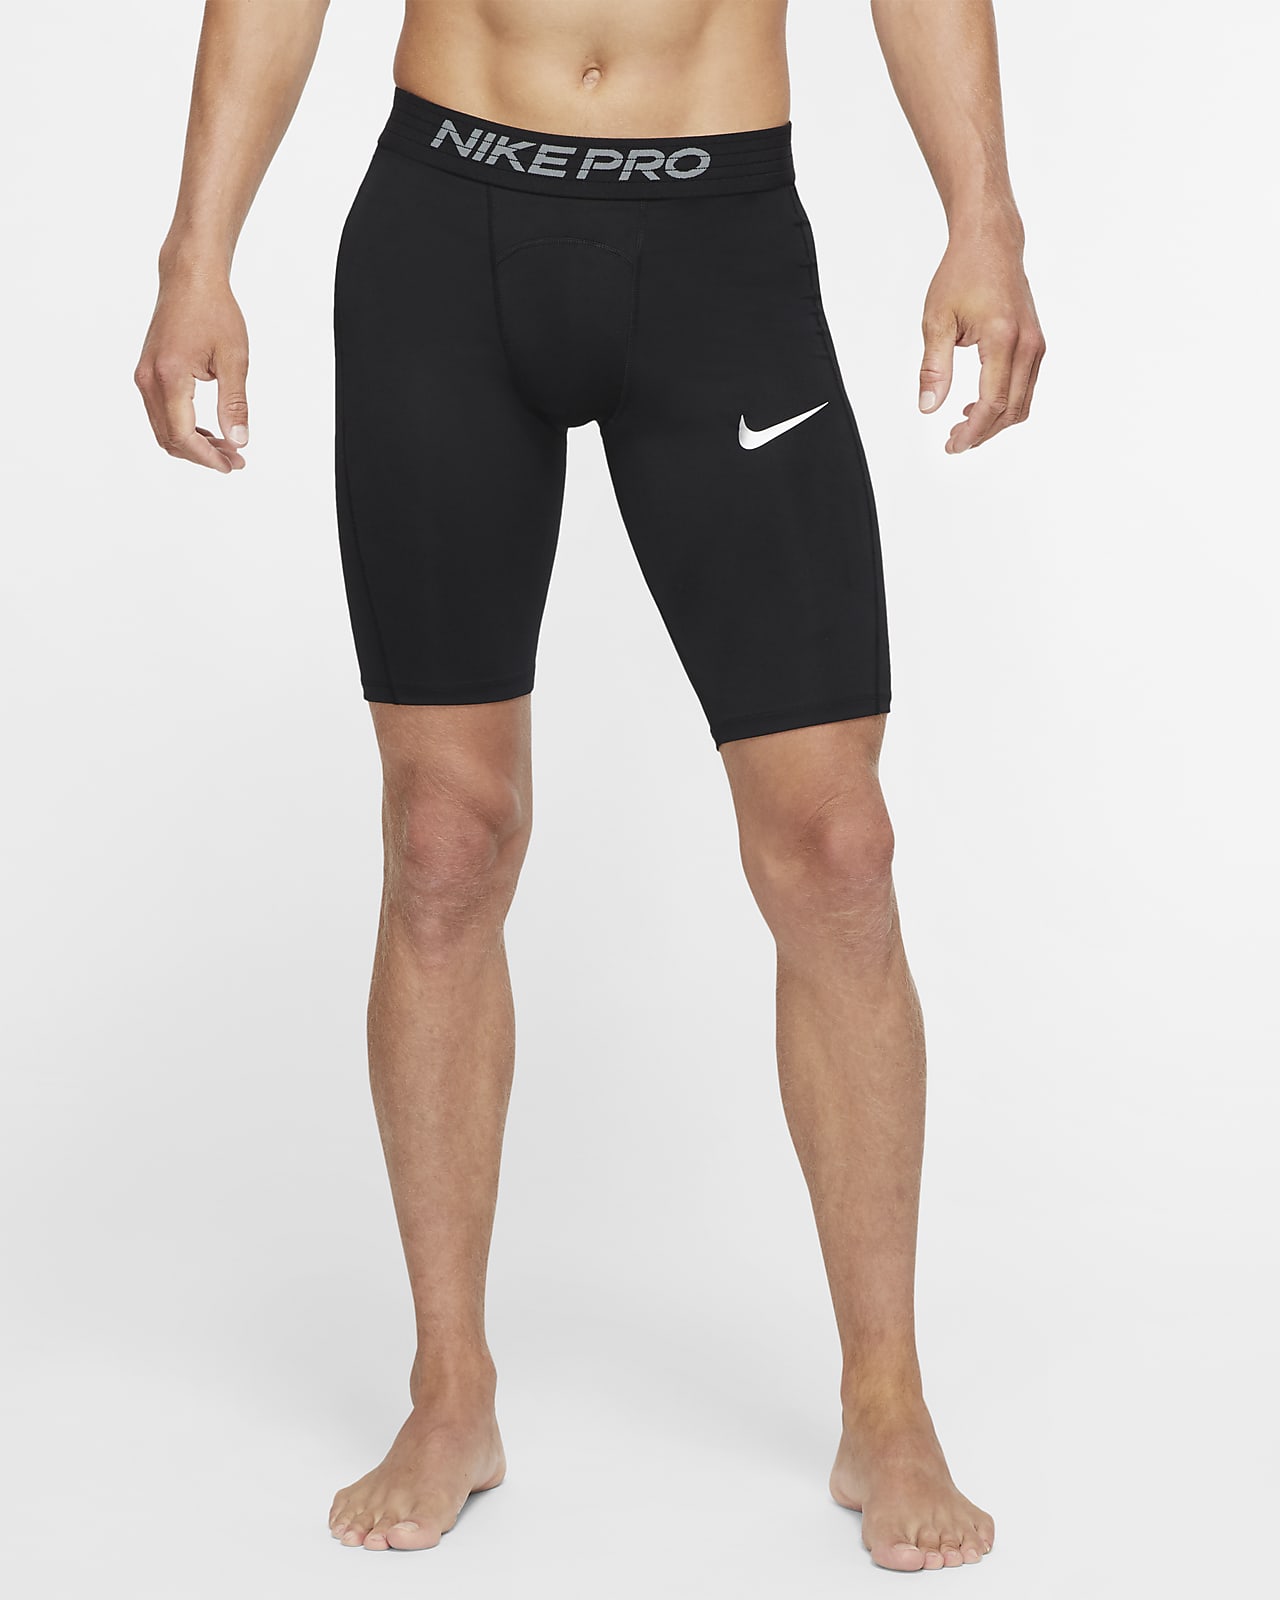 nike pro compression shorts